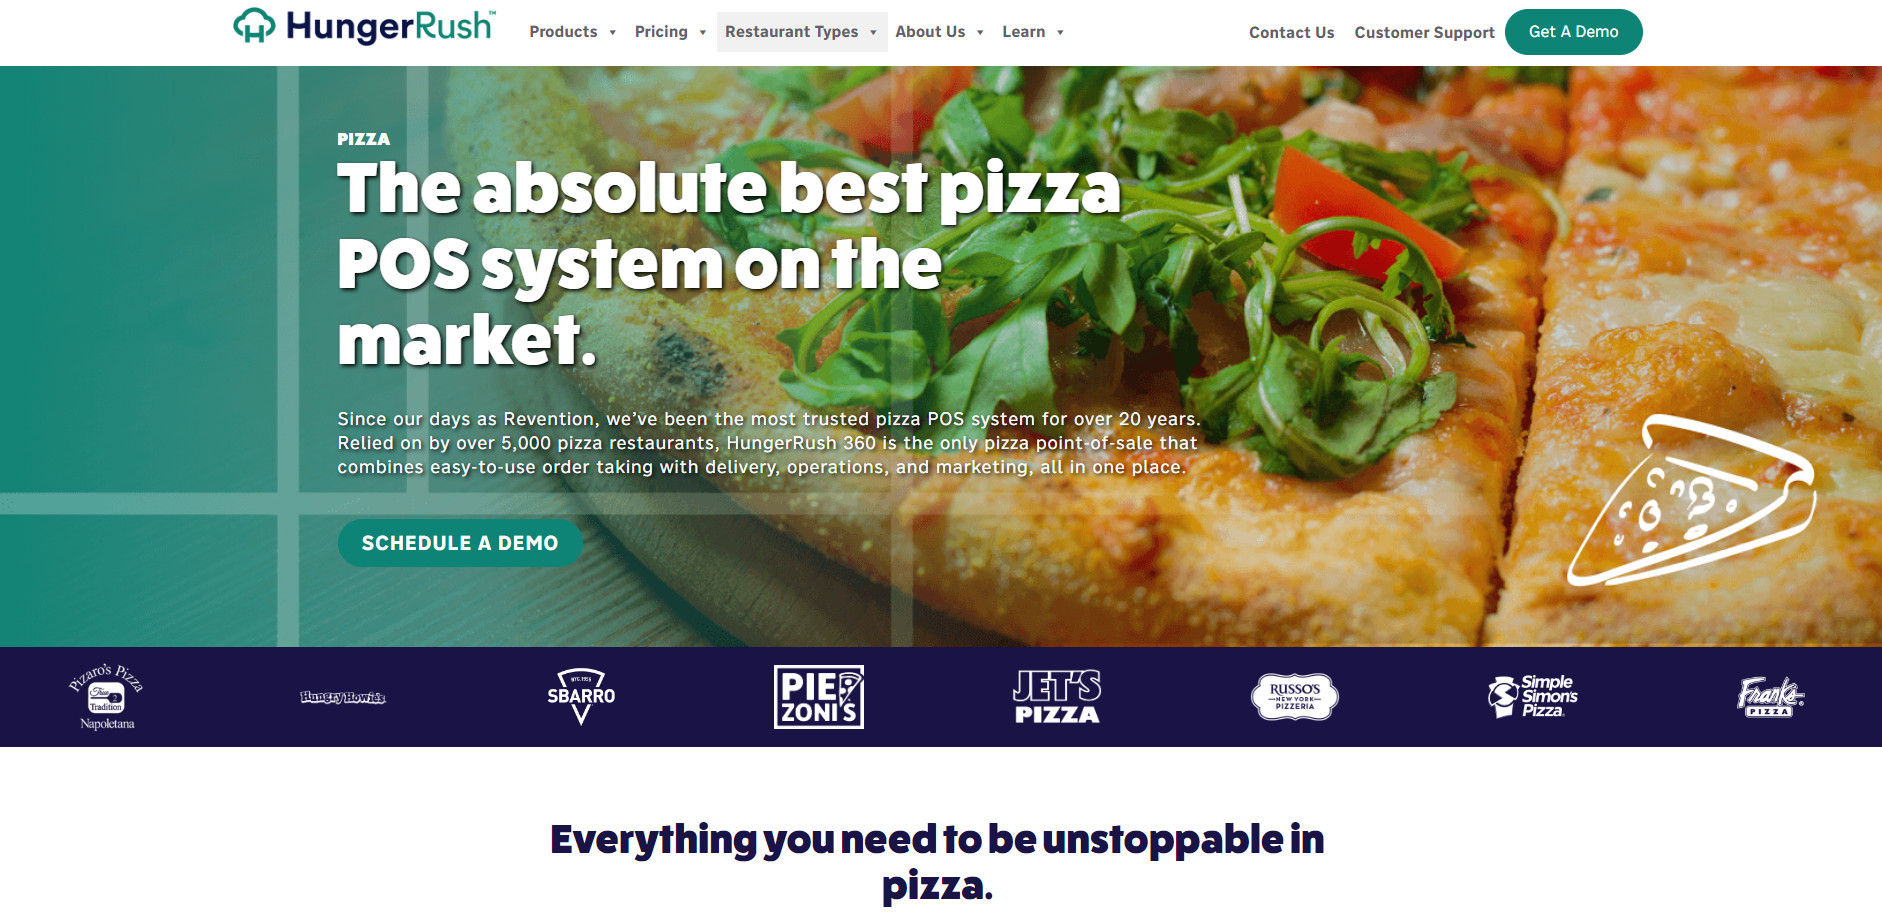 pos pizza - hungerrush website